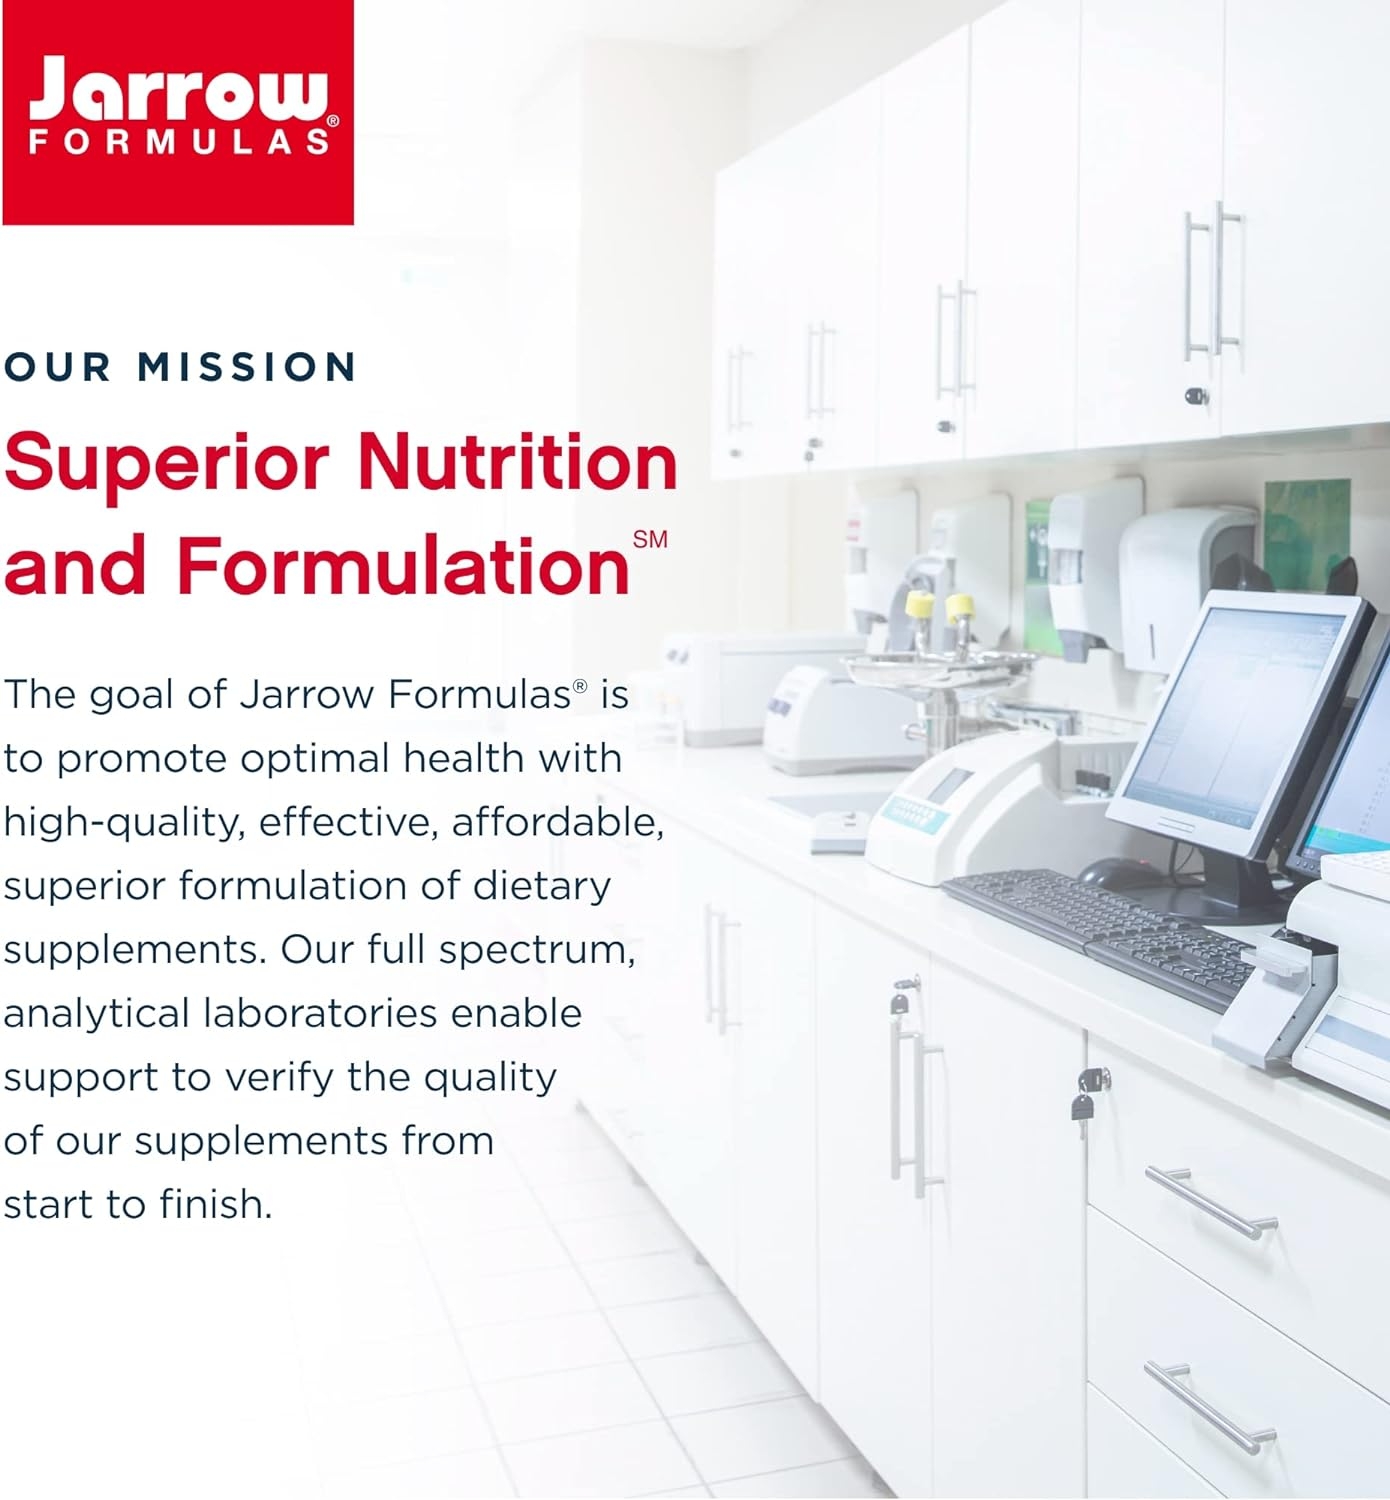 Jarrow Formulas Milk Thistle, Promotes Liver Health, 150 mg Caps, 100 Count